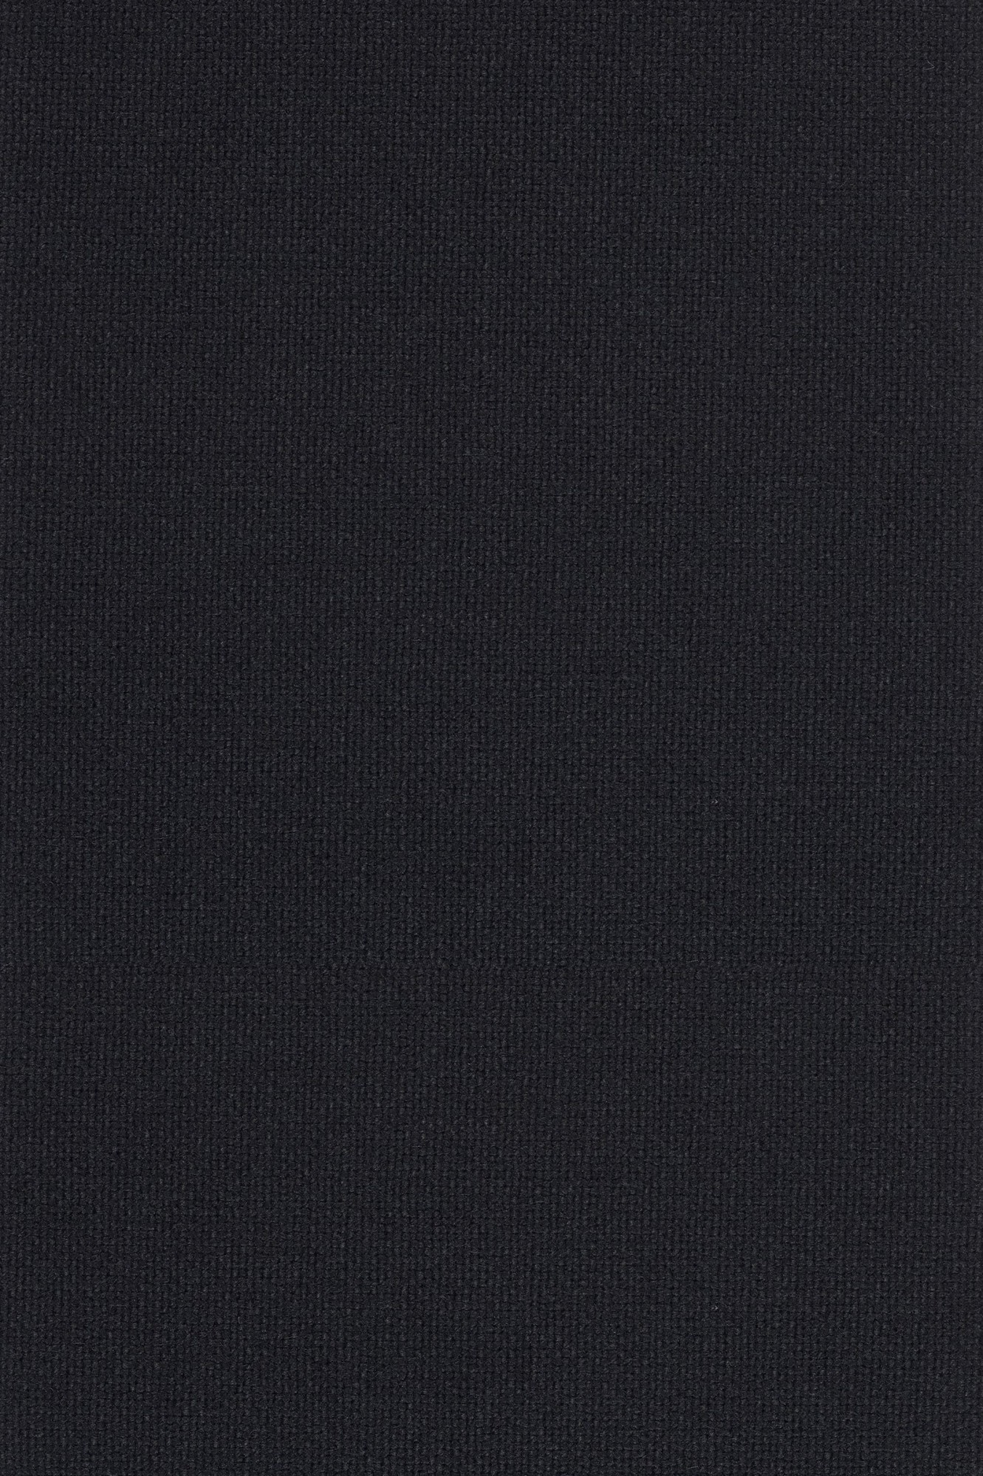 Fabric sample Hallingdal 65 190 grey